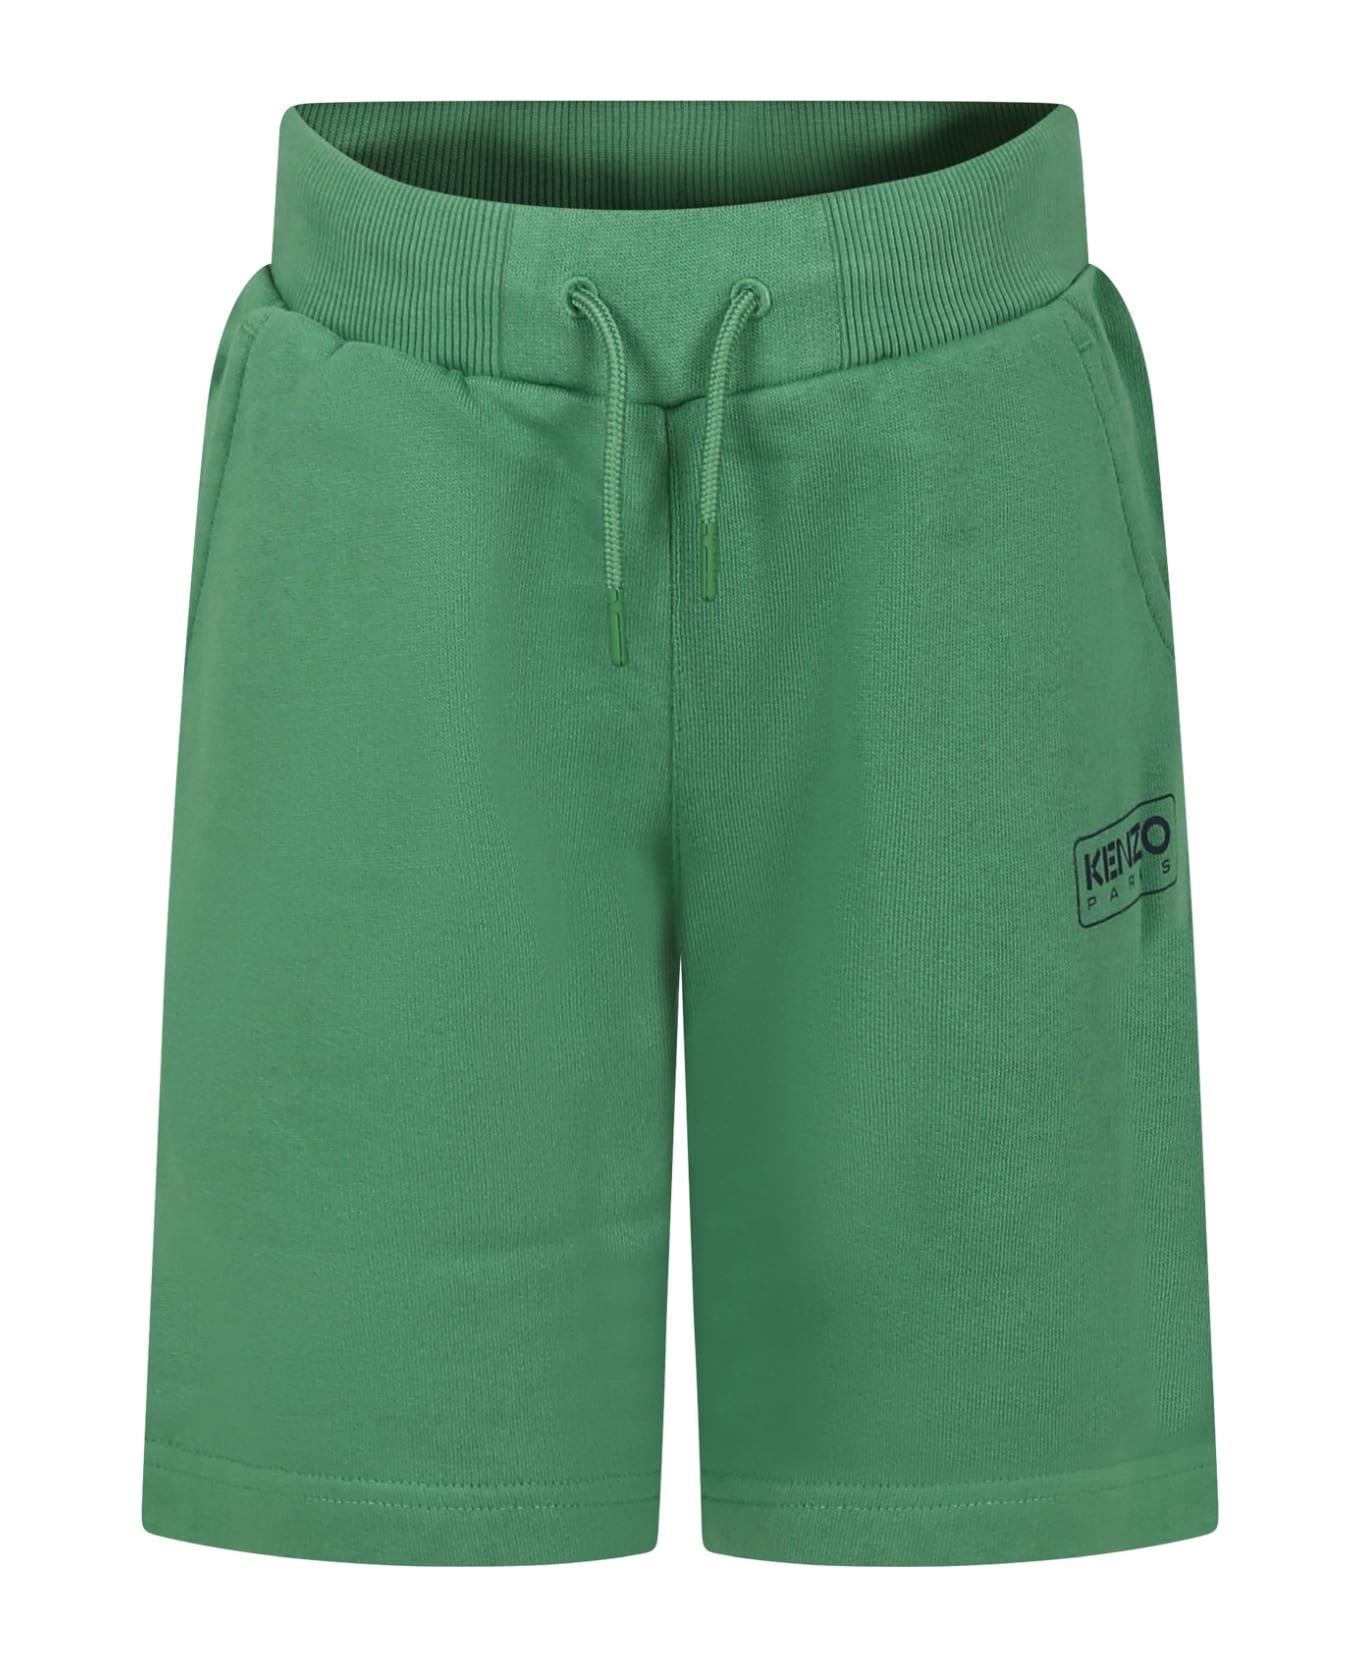 Kenzo Kids Green Shorts For Boy With Logo Print - Green